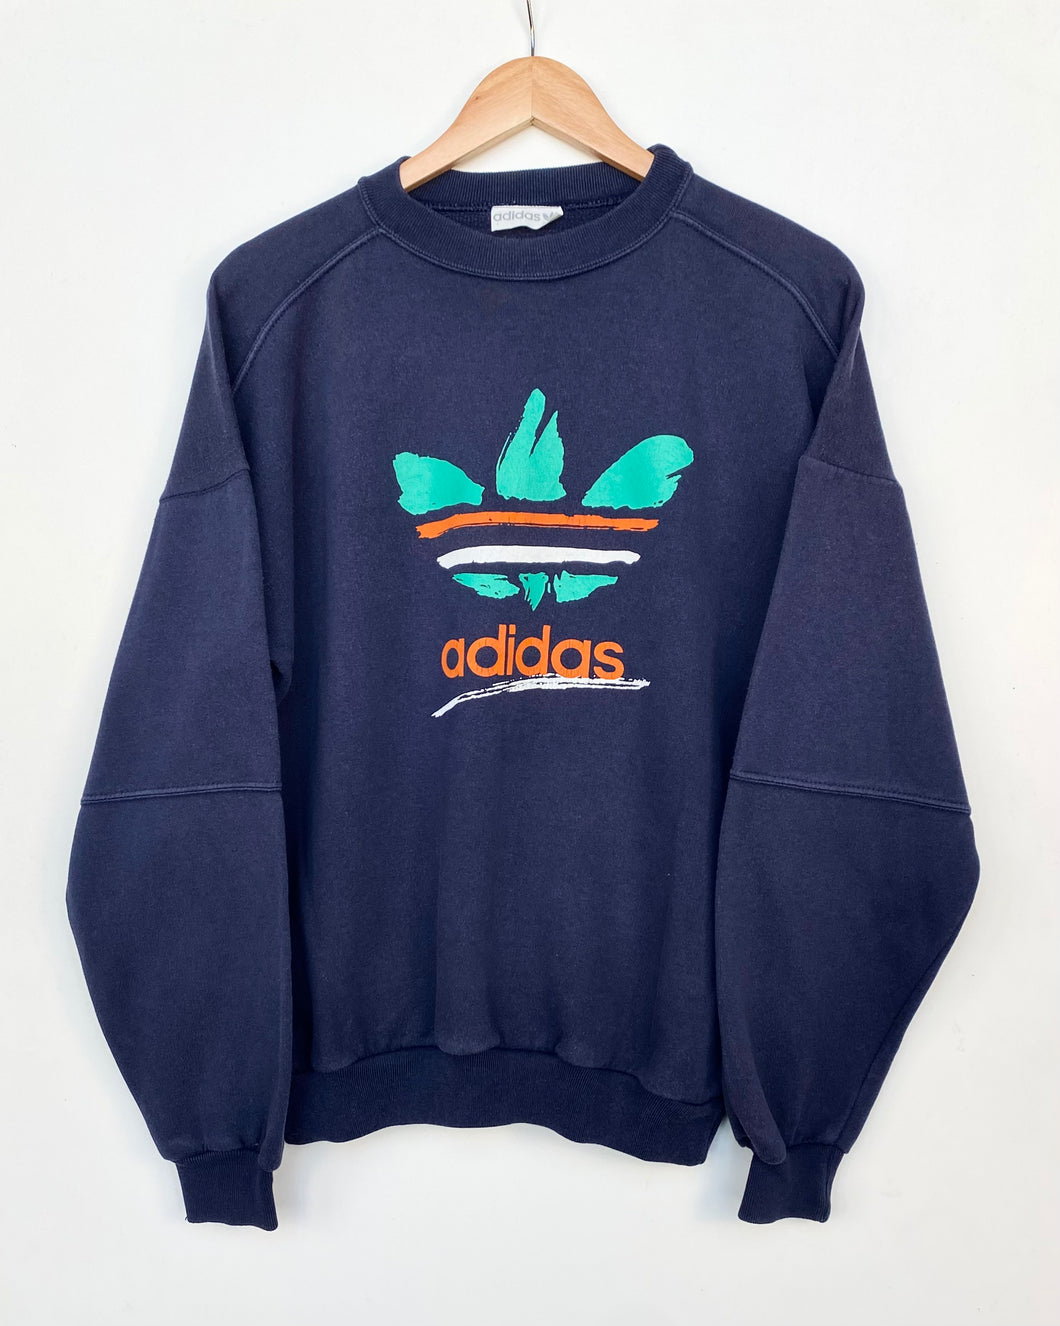 90s Adidas Sweatshirt (M) – Red Cactus Vintage